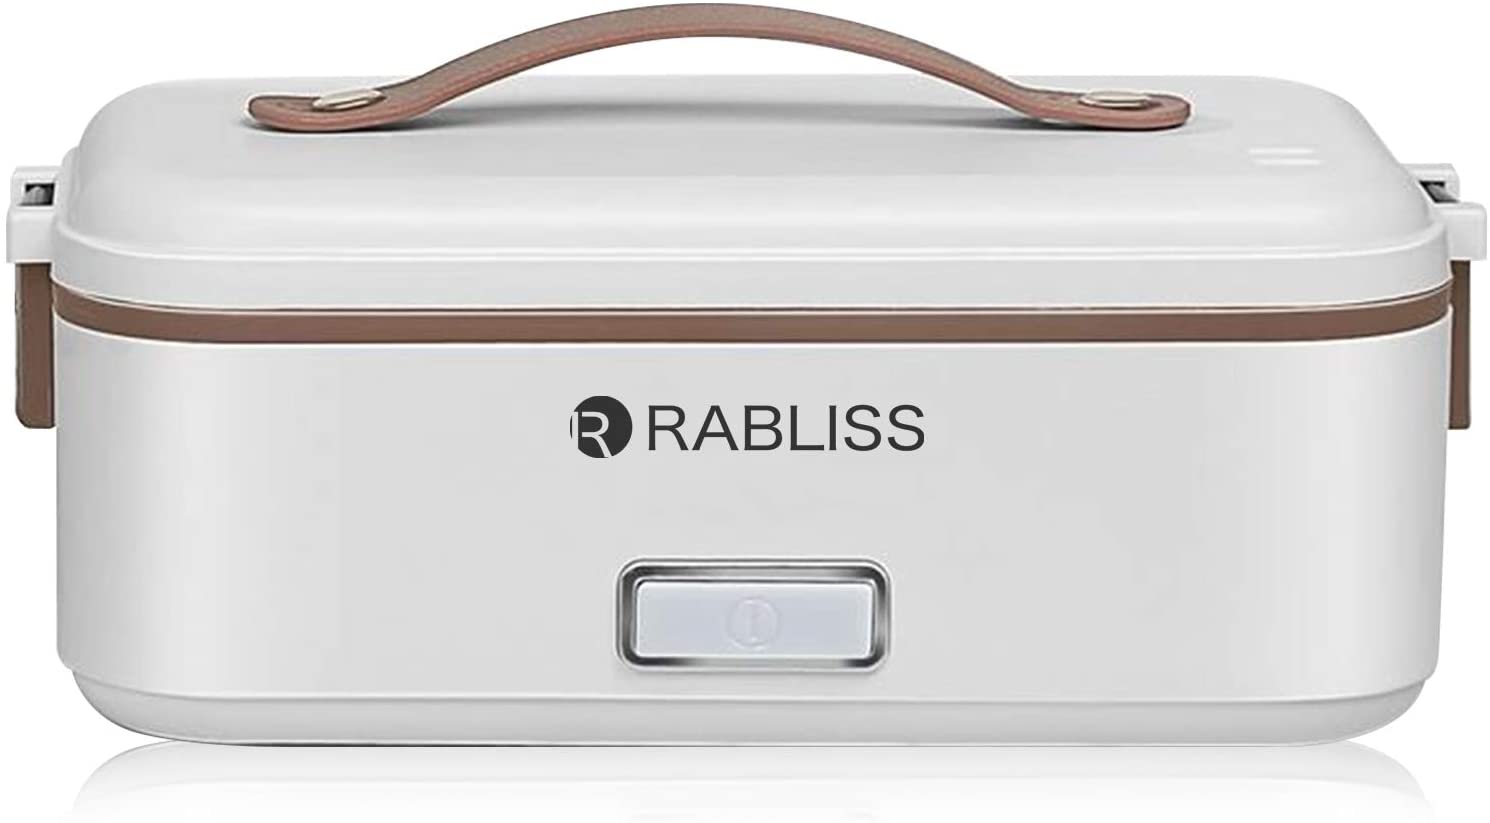 Rabliss 小林藥品株式會社 炊飯器 1人用 超高速便當盒炊飯器